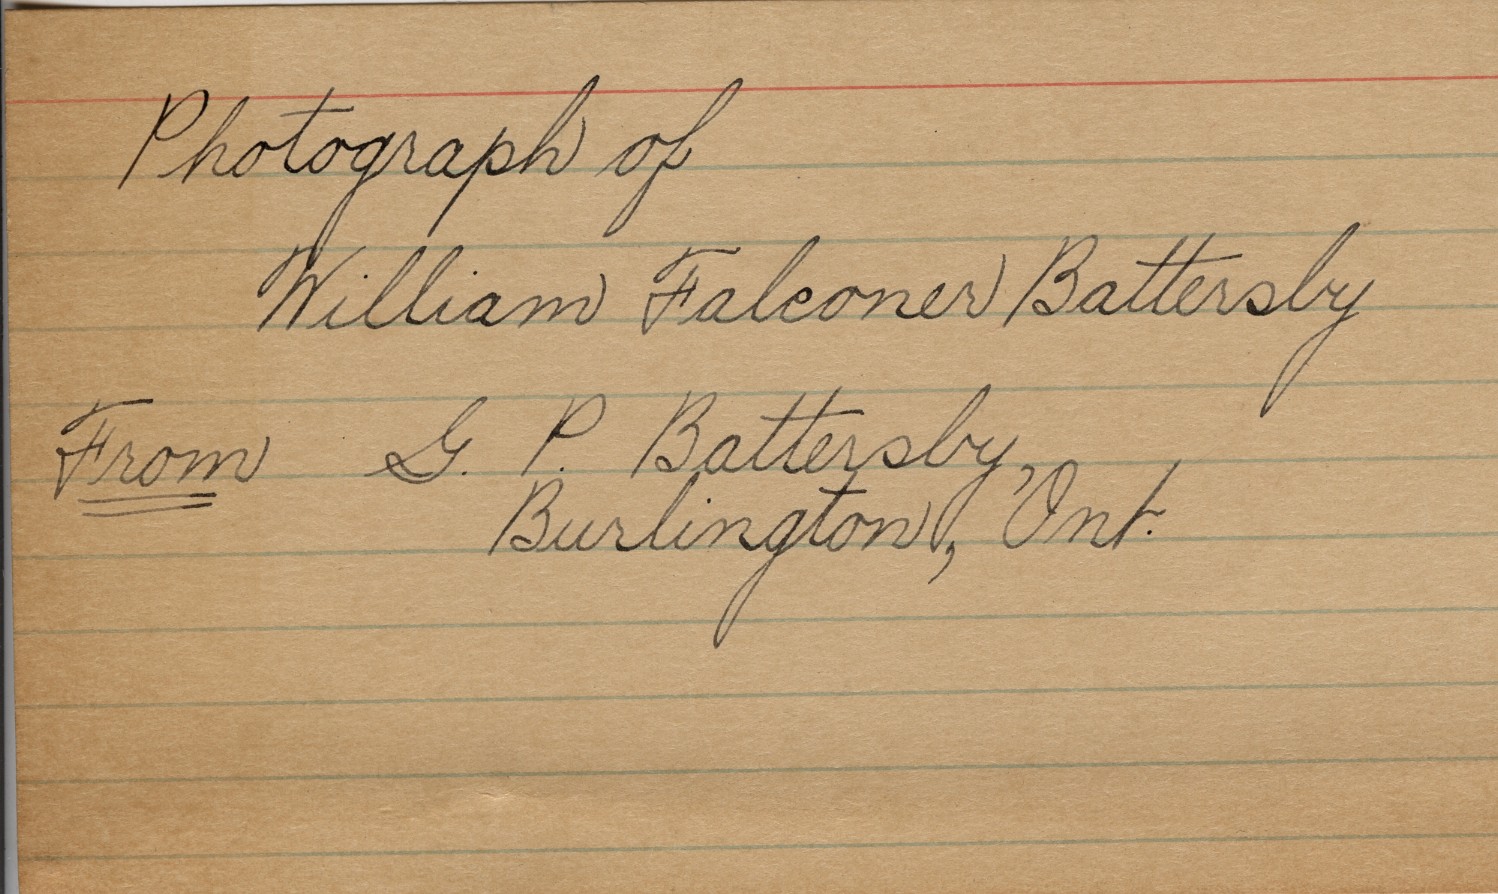 Card Describing Photograph of Battersby